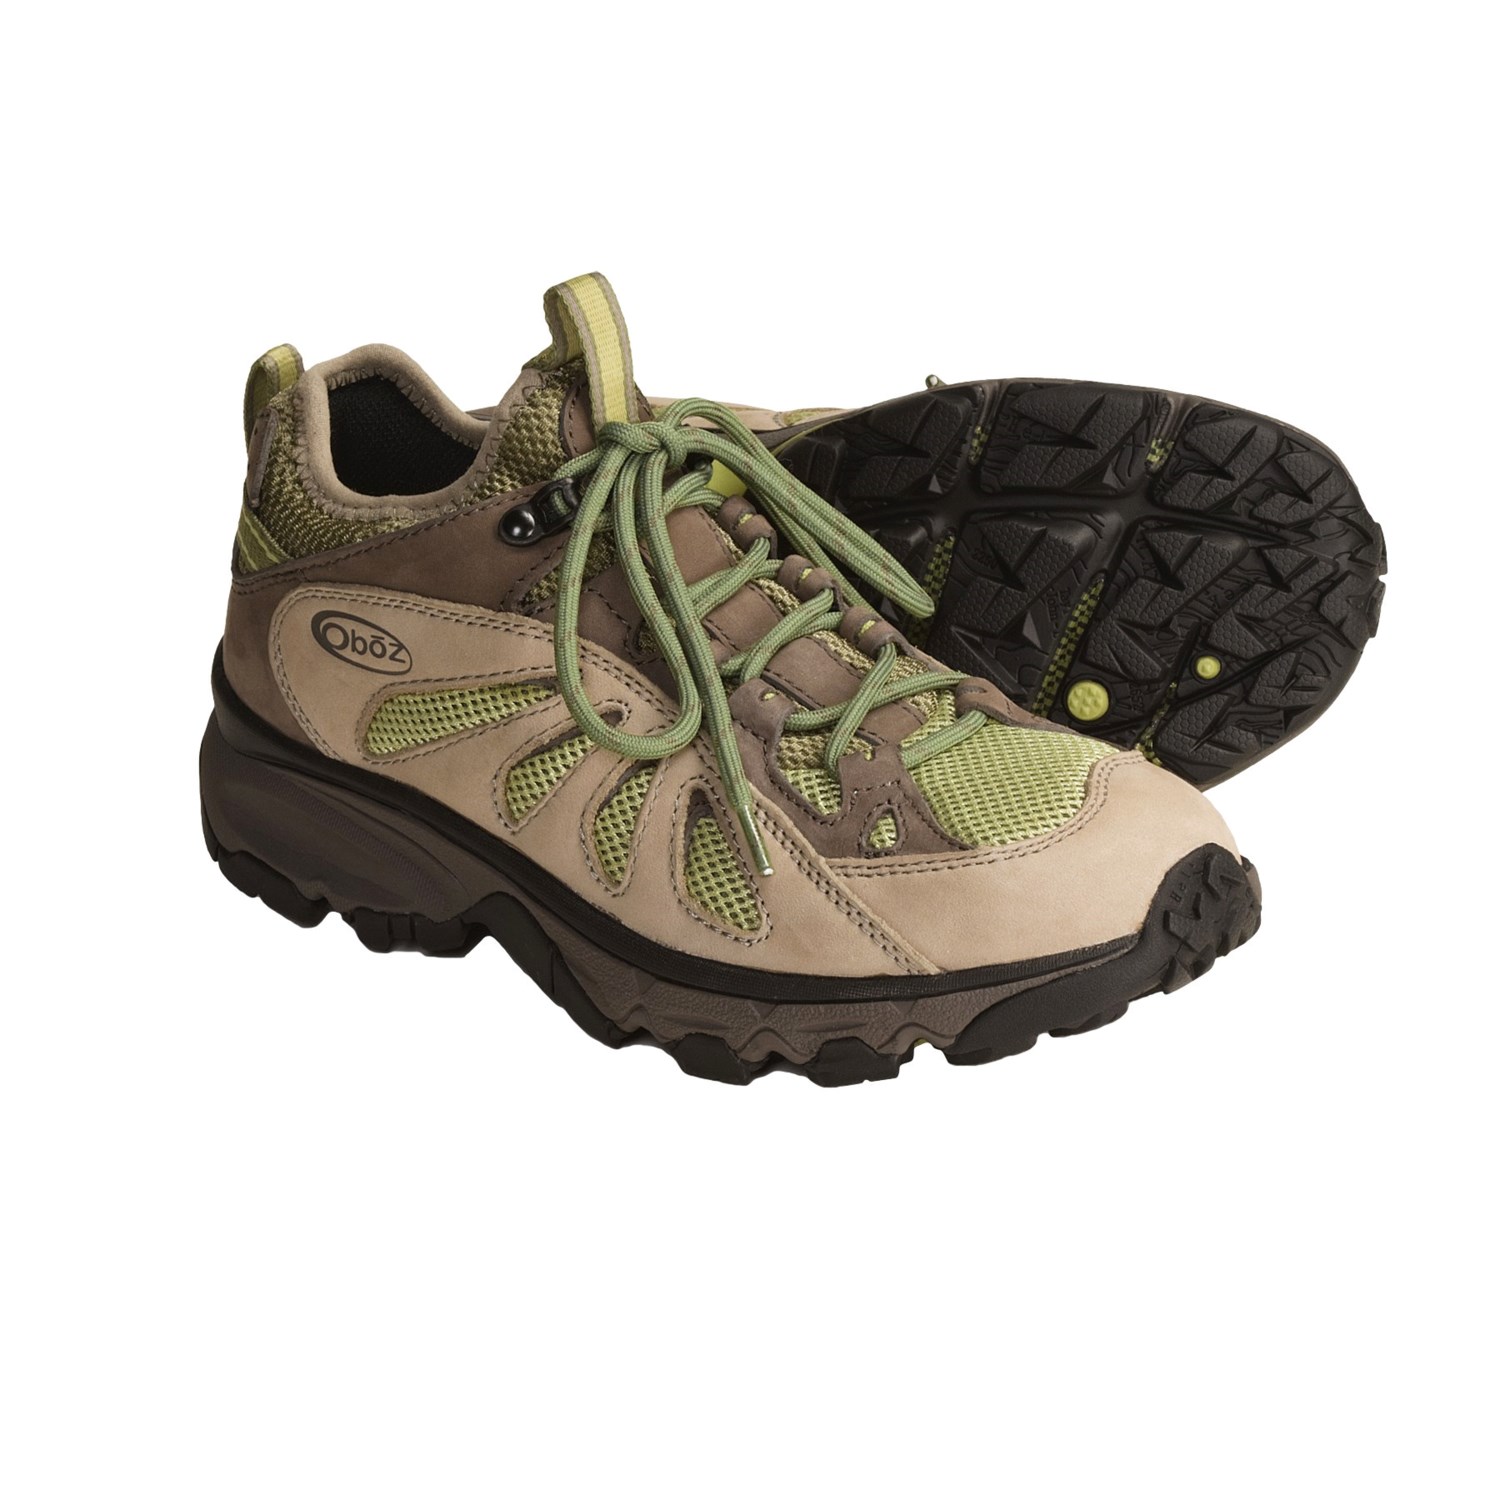 Oboz Footwear Contour Trail Shoes (For Women) 3829M - Save 52%